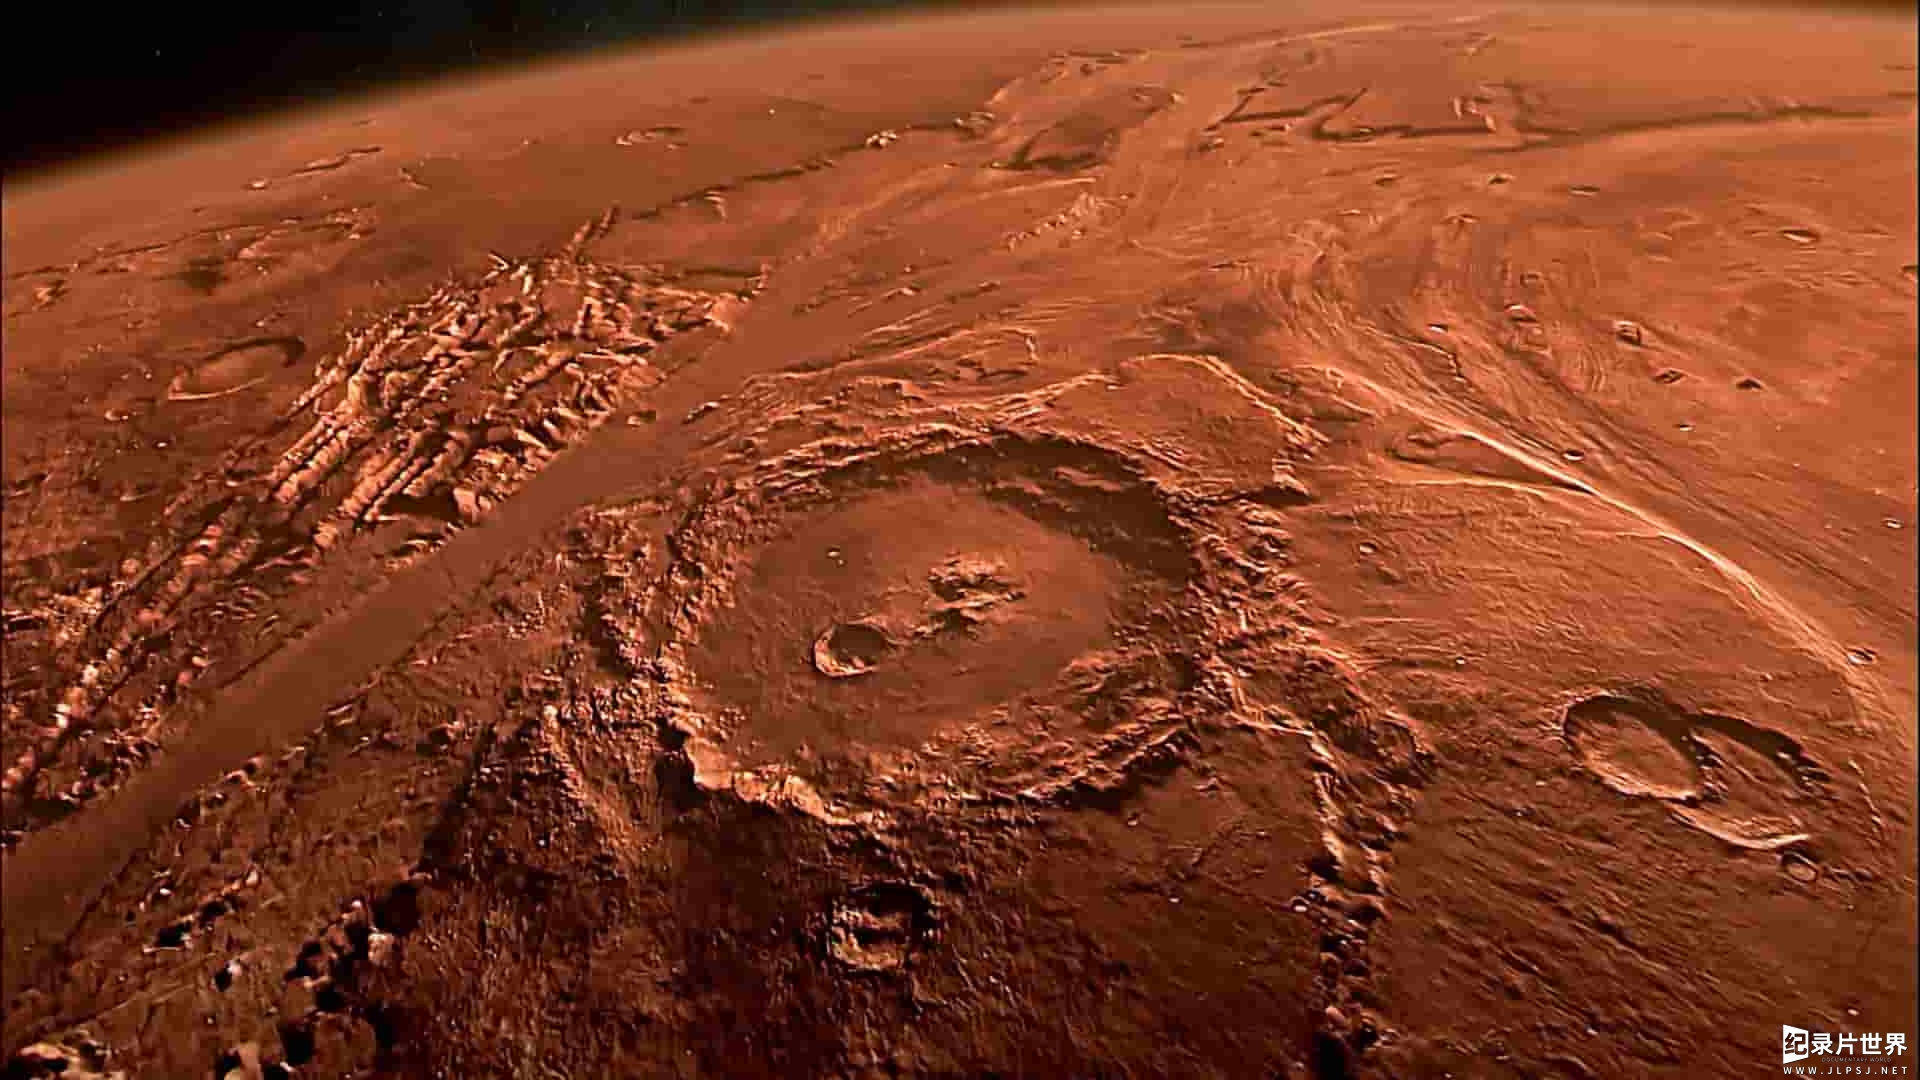  IMAX纪录片《火星漫游 Roving Mars》全1集